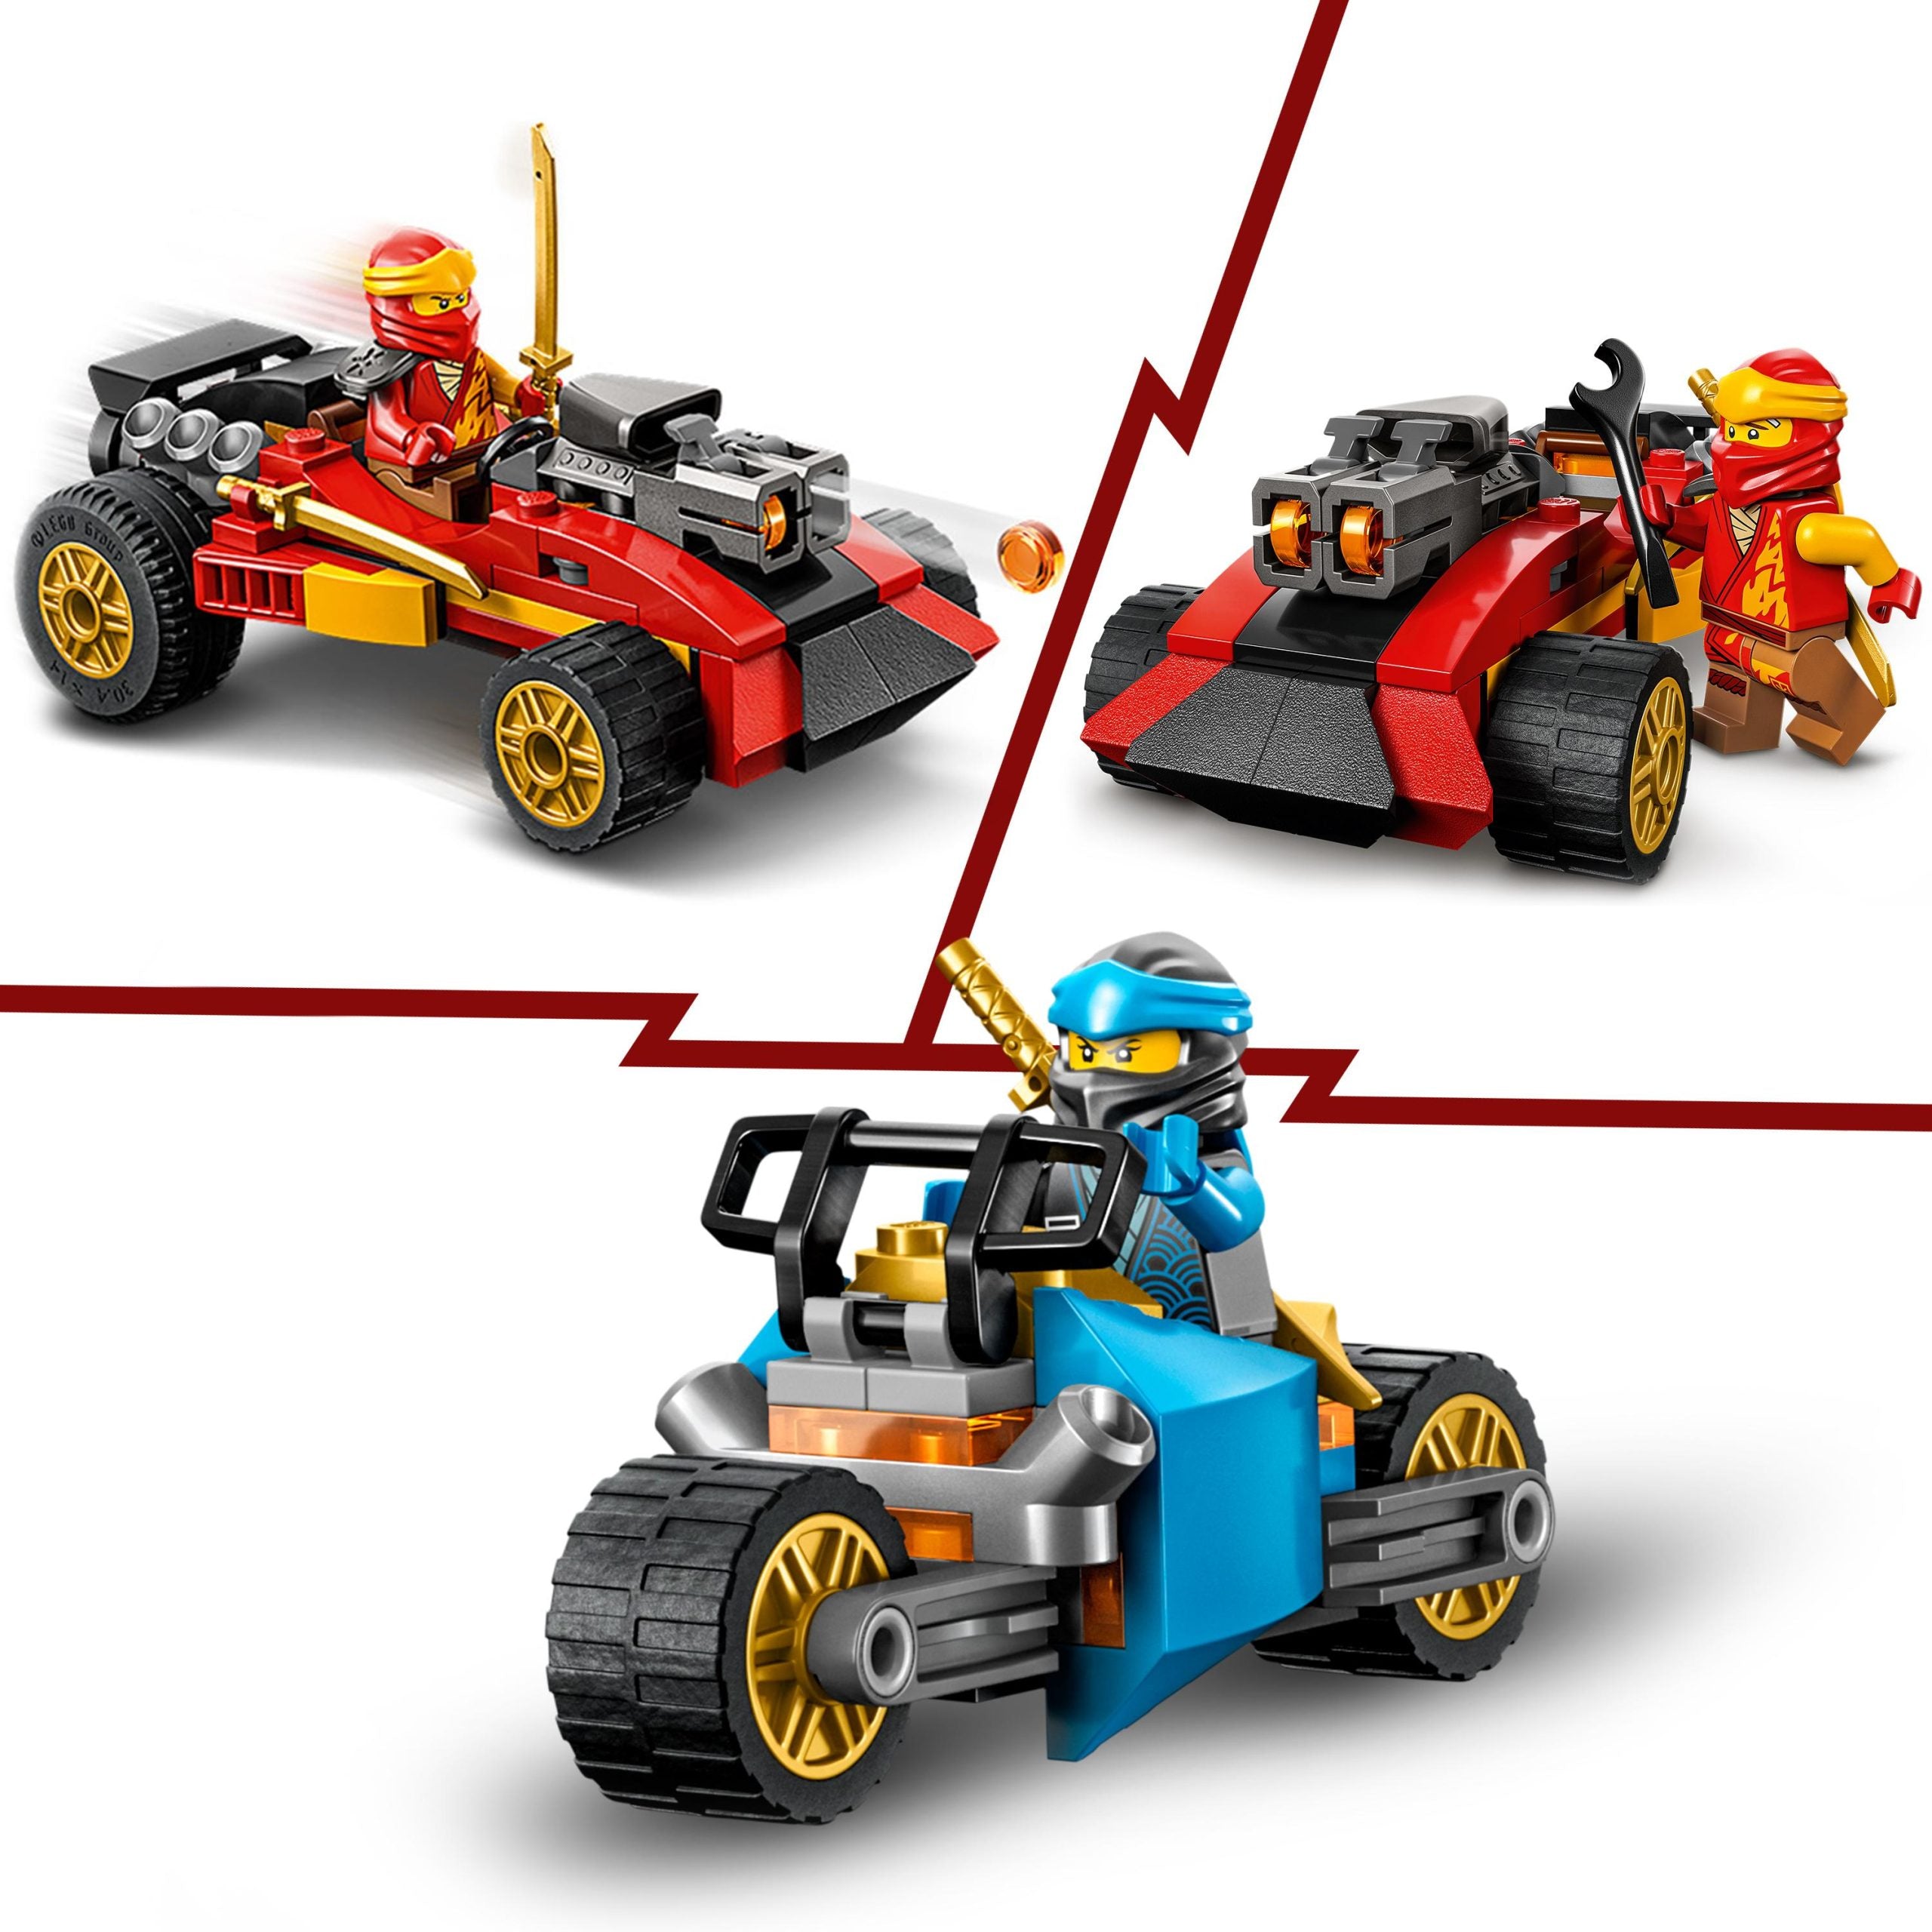 71787 LEGO Ninjago - Set creativo di mattoncini Ninjago -